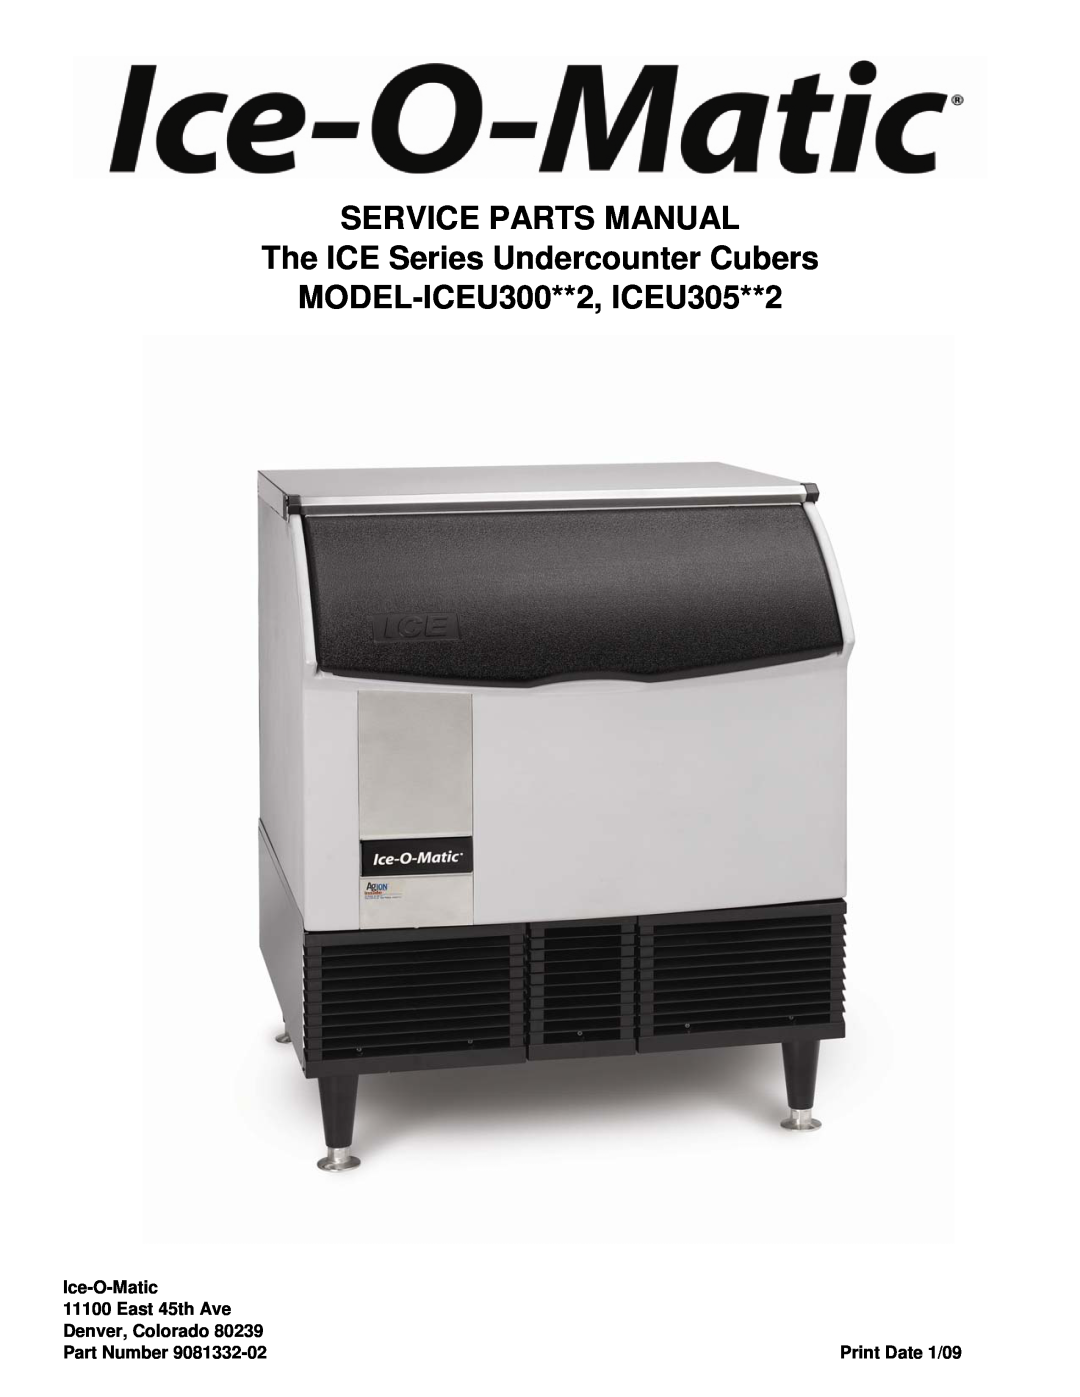 Ice-O-Matic manual Service Parts Manual, The ICE Series Undercounter Cubers, MODEL-ICEU300**2,ICEU305**2, Ice-O-Matic 